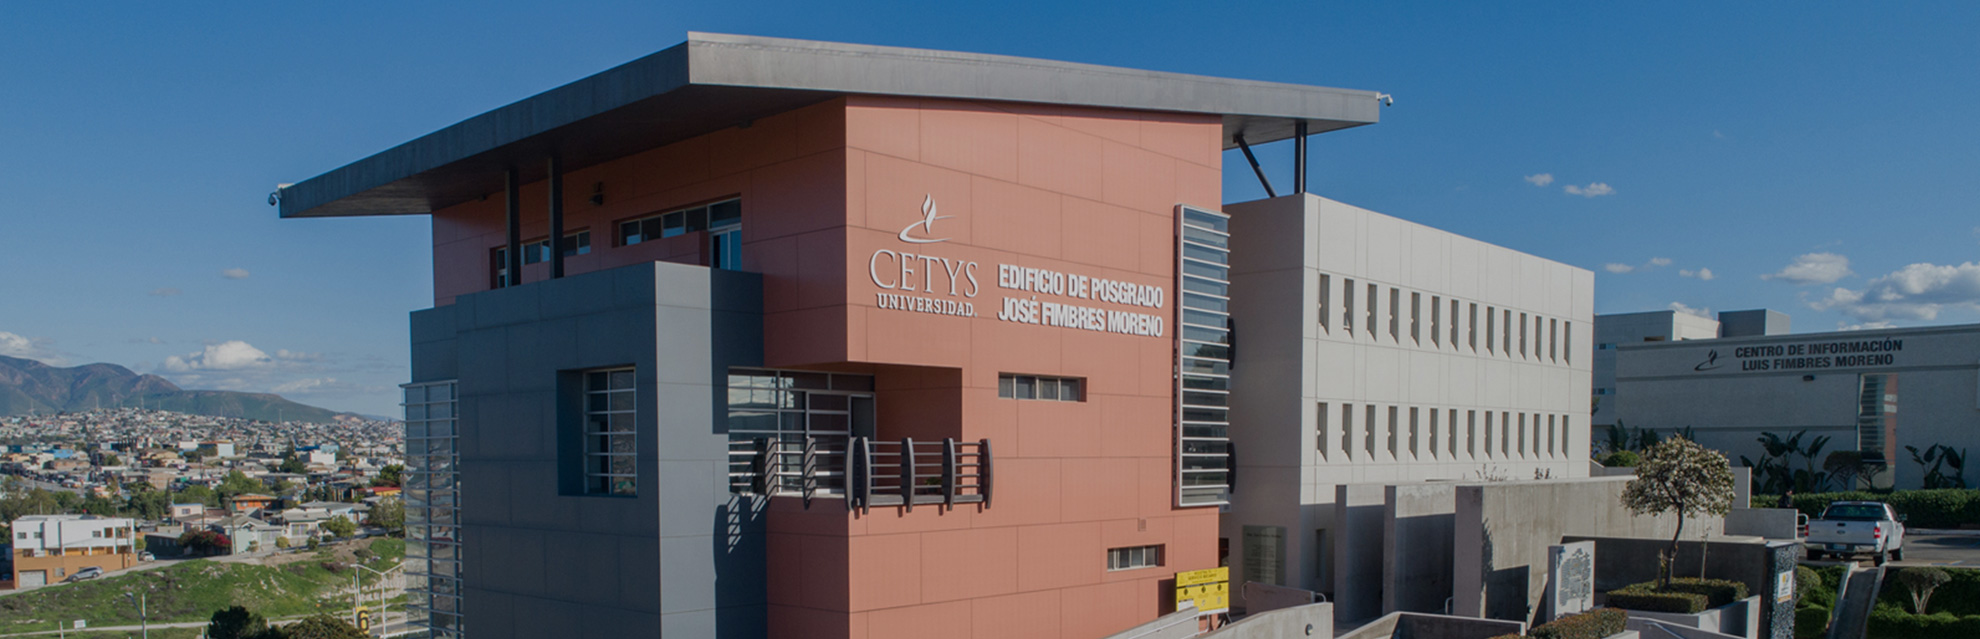 Cetys Universidad Tijuana